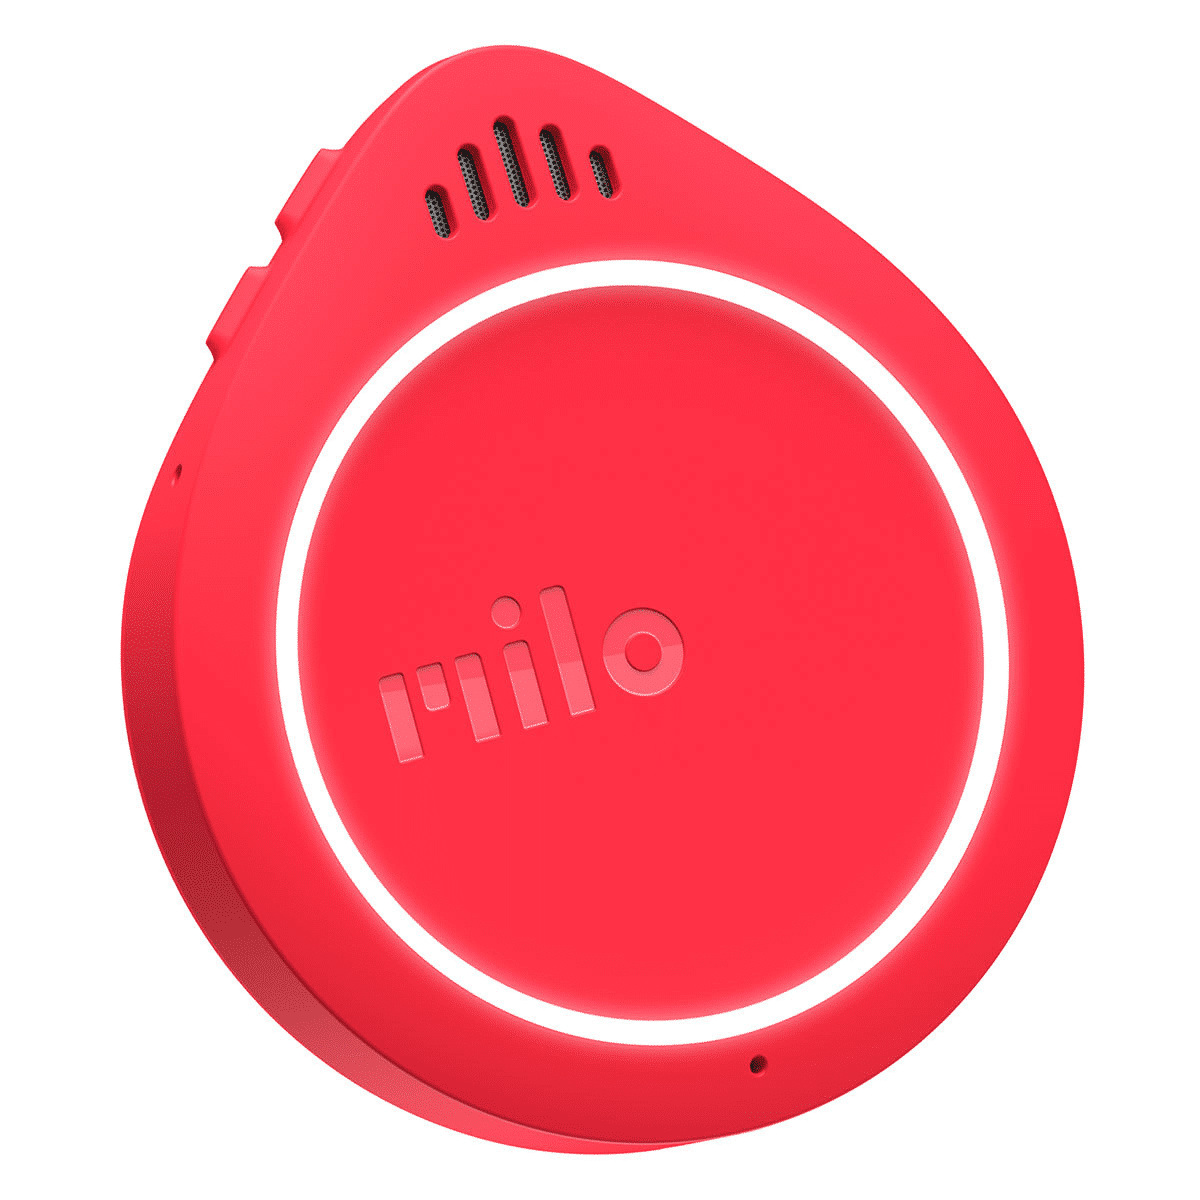 Milo Action Communicator – Miloberry Red